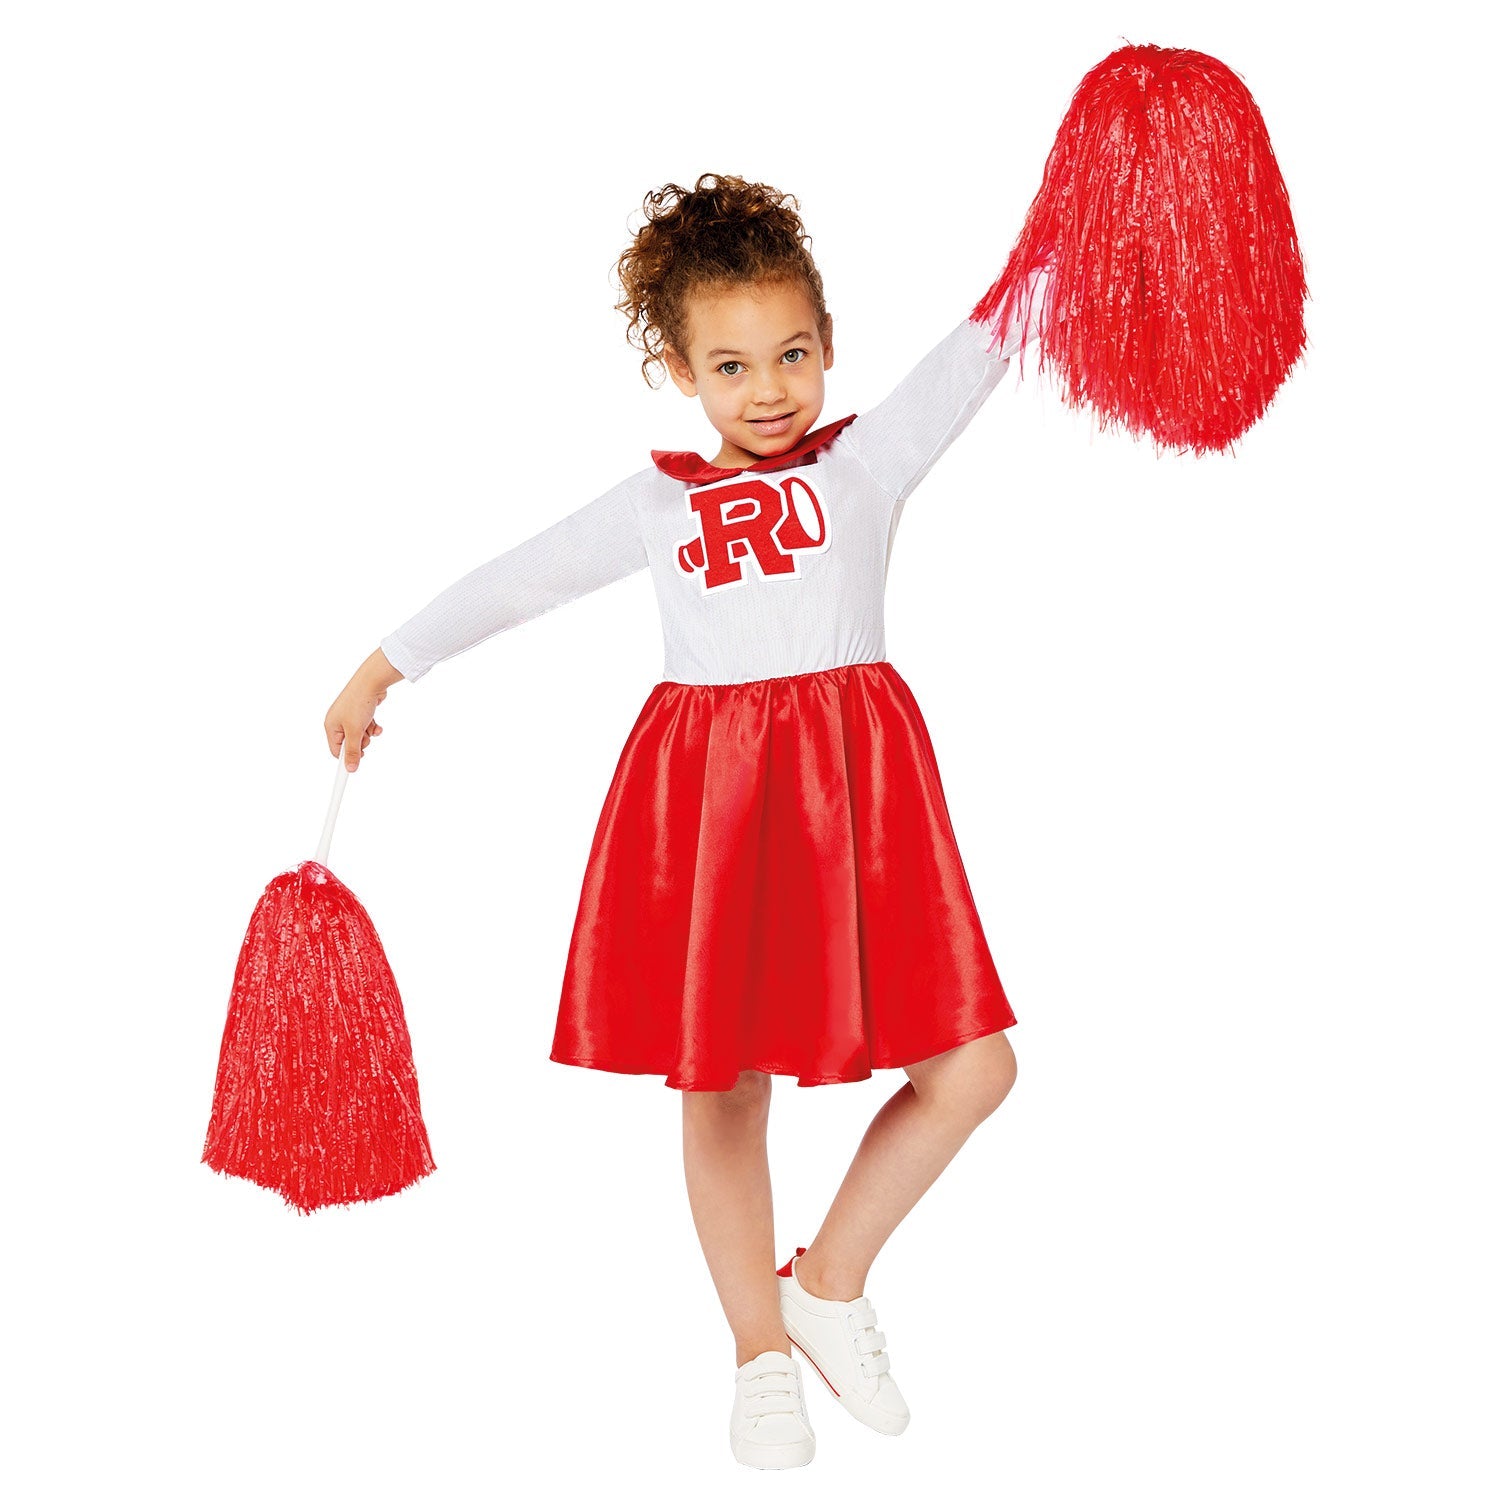 Costume Grease Sandy Rydell Cheerleader - Child